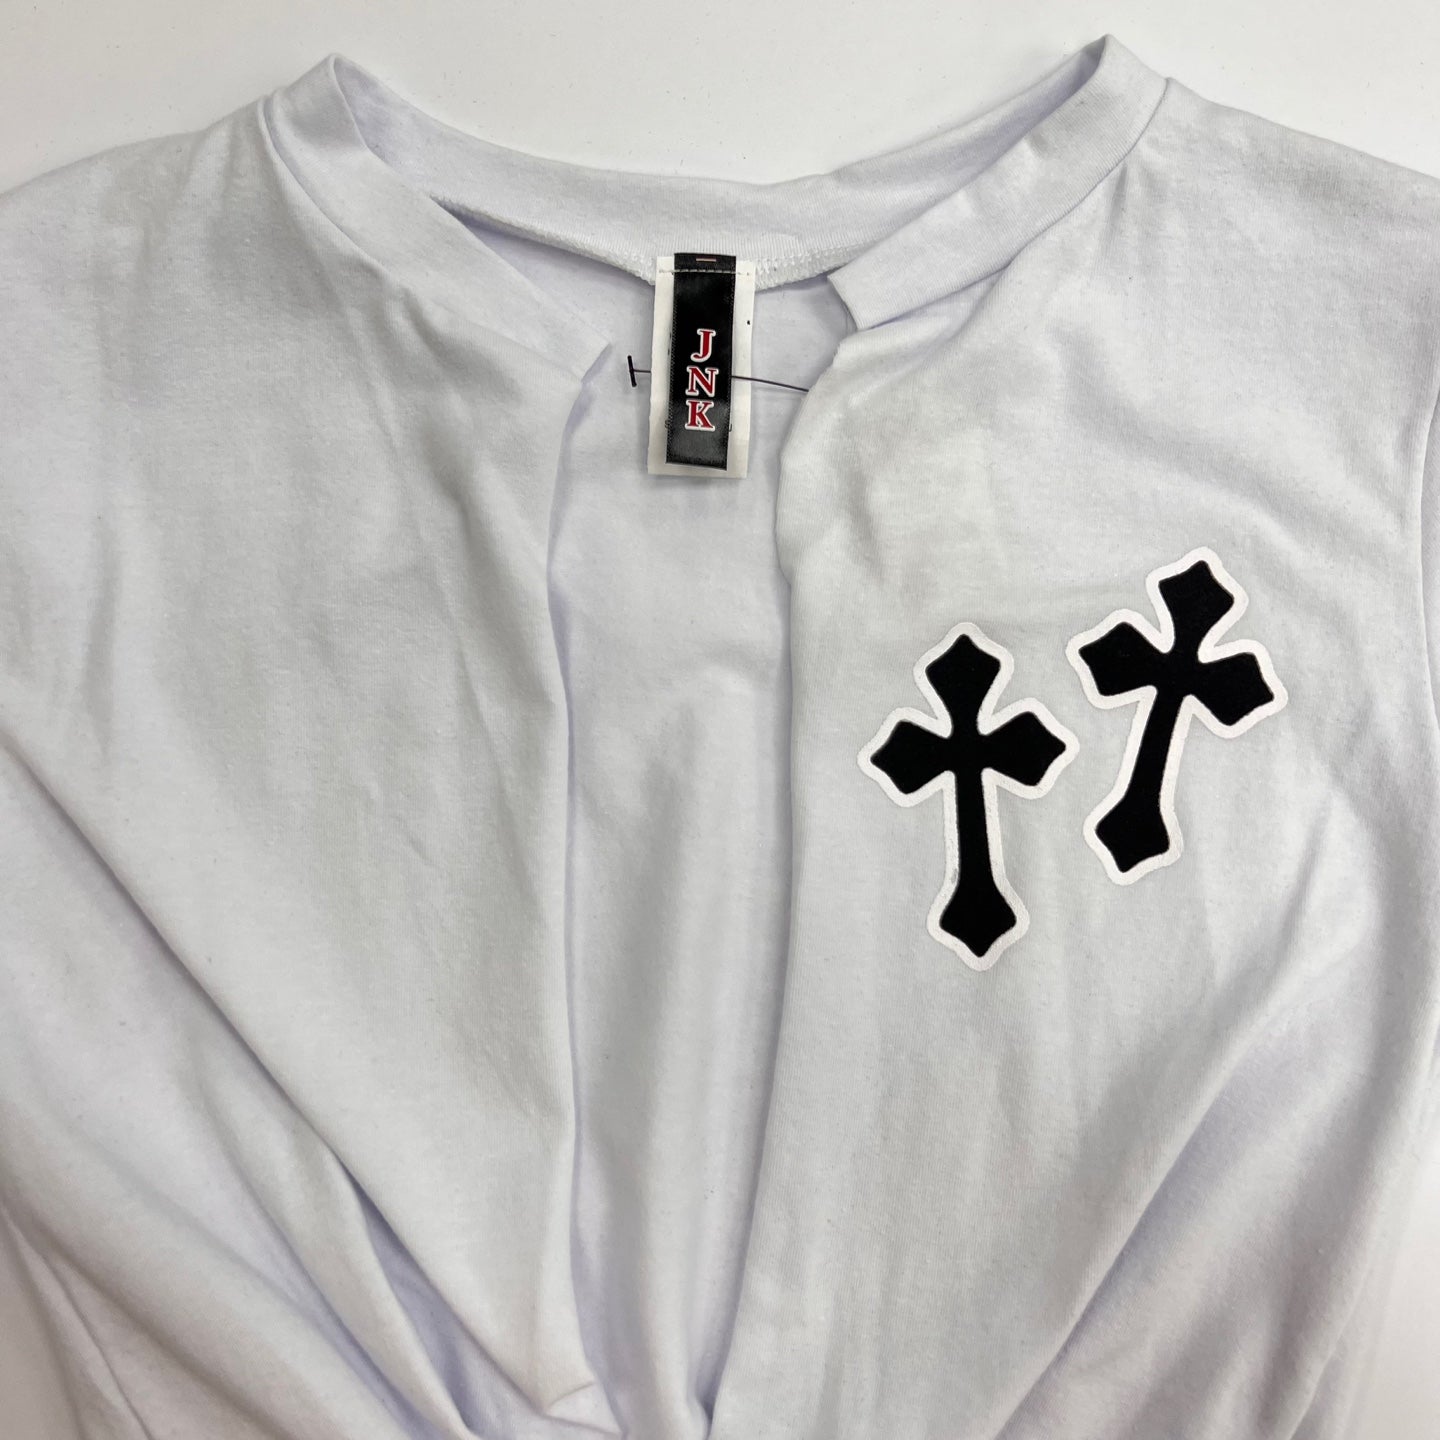 Women's Tie Front Knot Cross Print T-Shirt